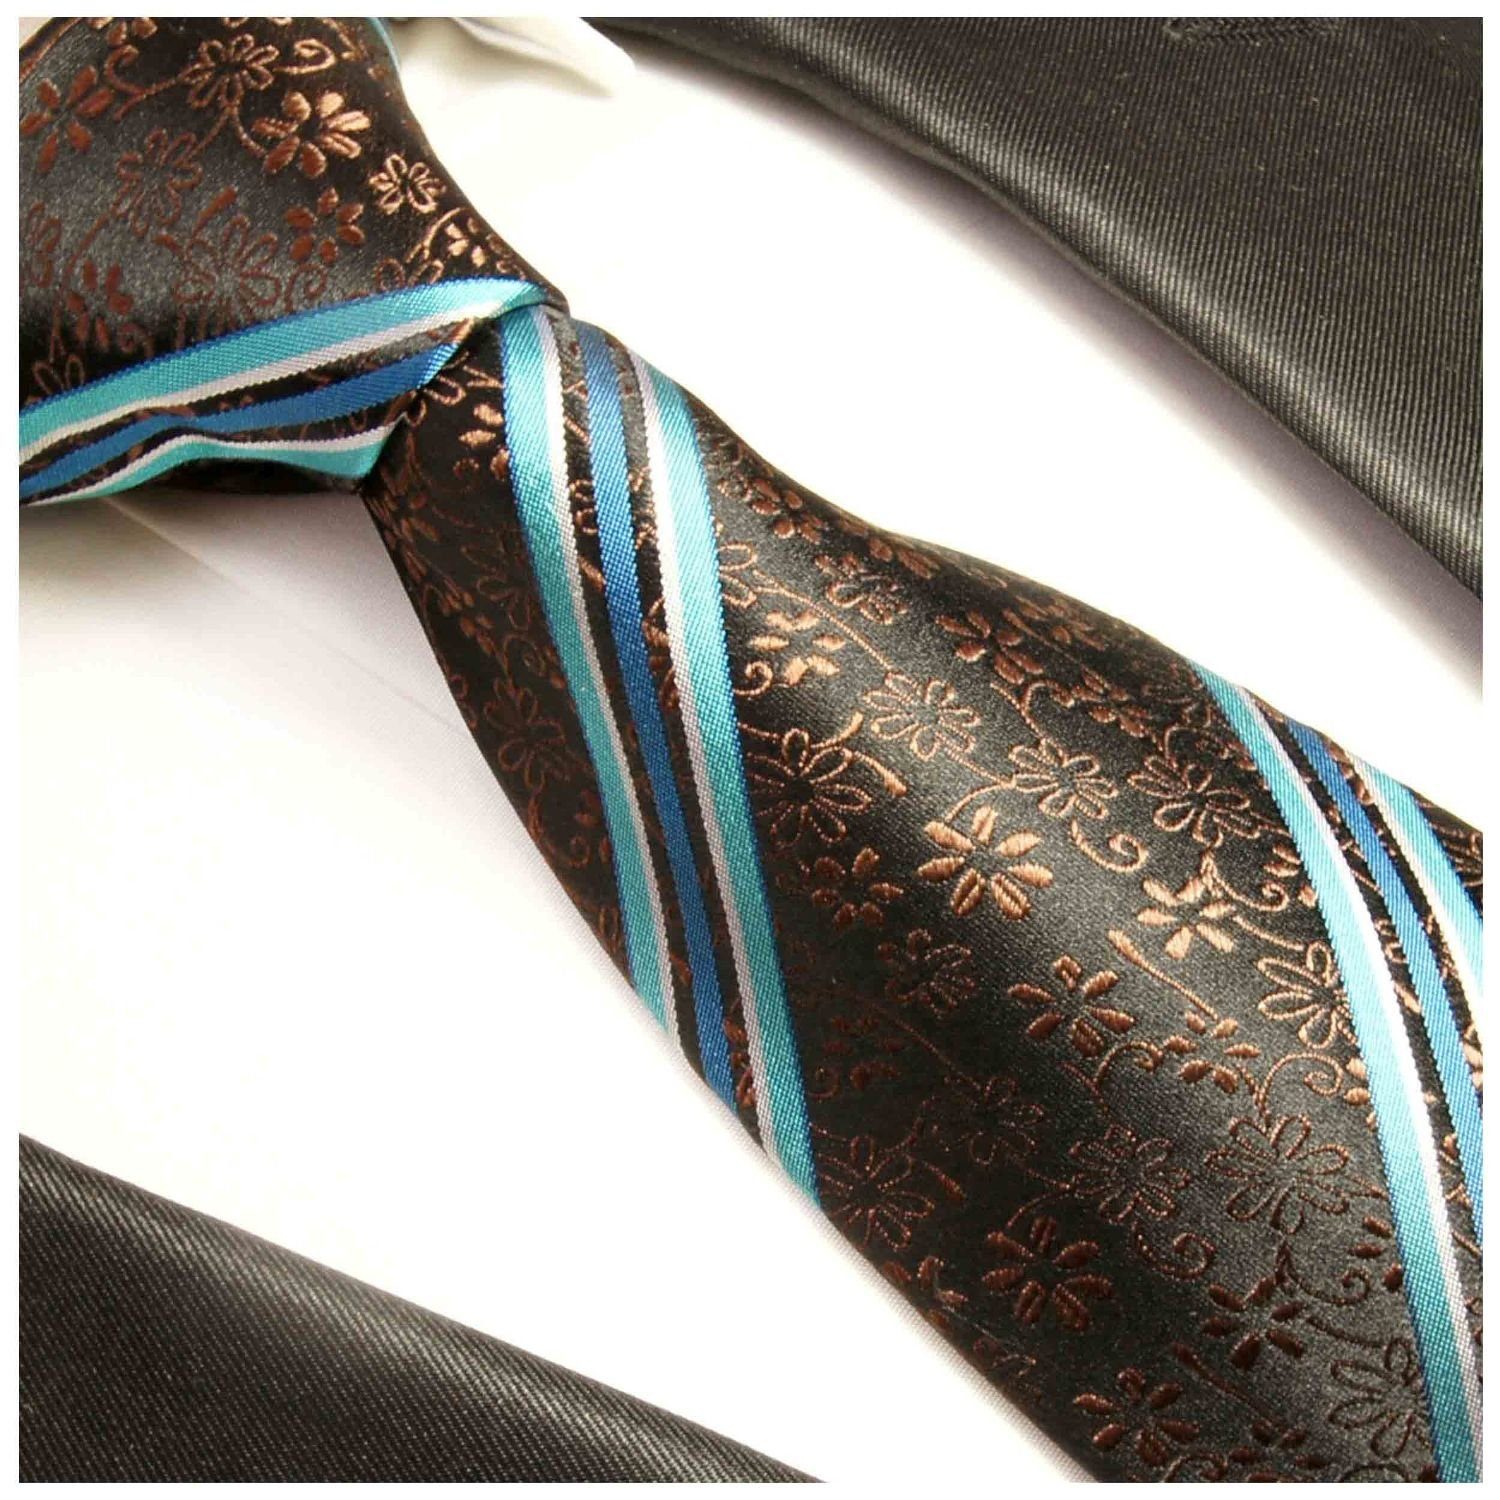 Paul Malone Krawatte Moderne 394 floral (6cm), 100% Seidenkrawatte Schmal gestreift türkis Herren braun Seide